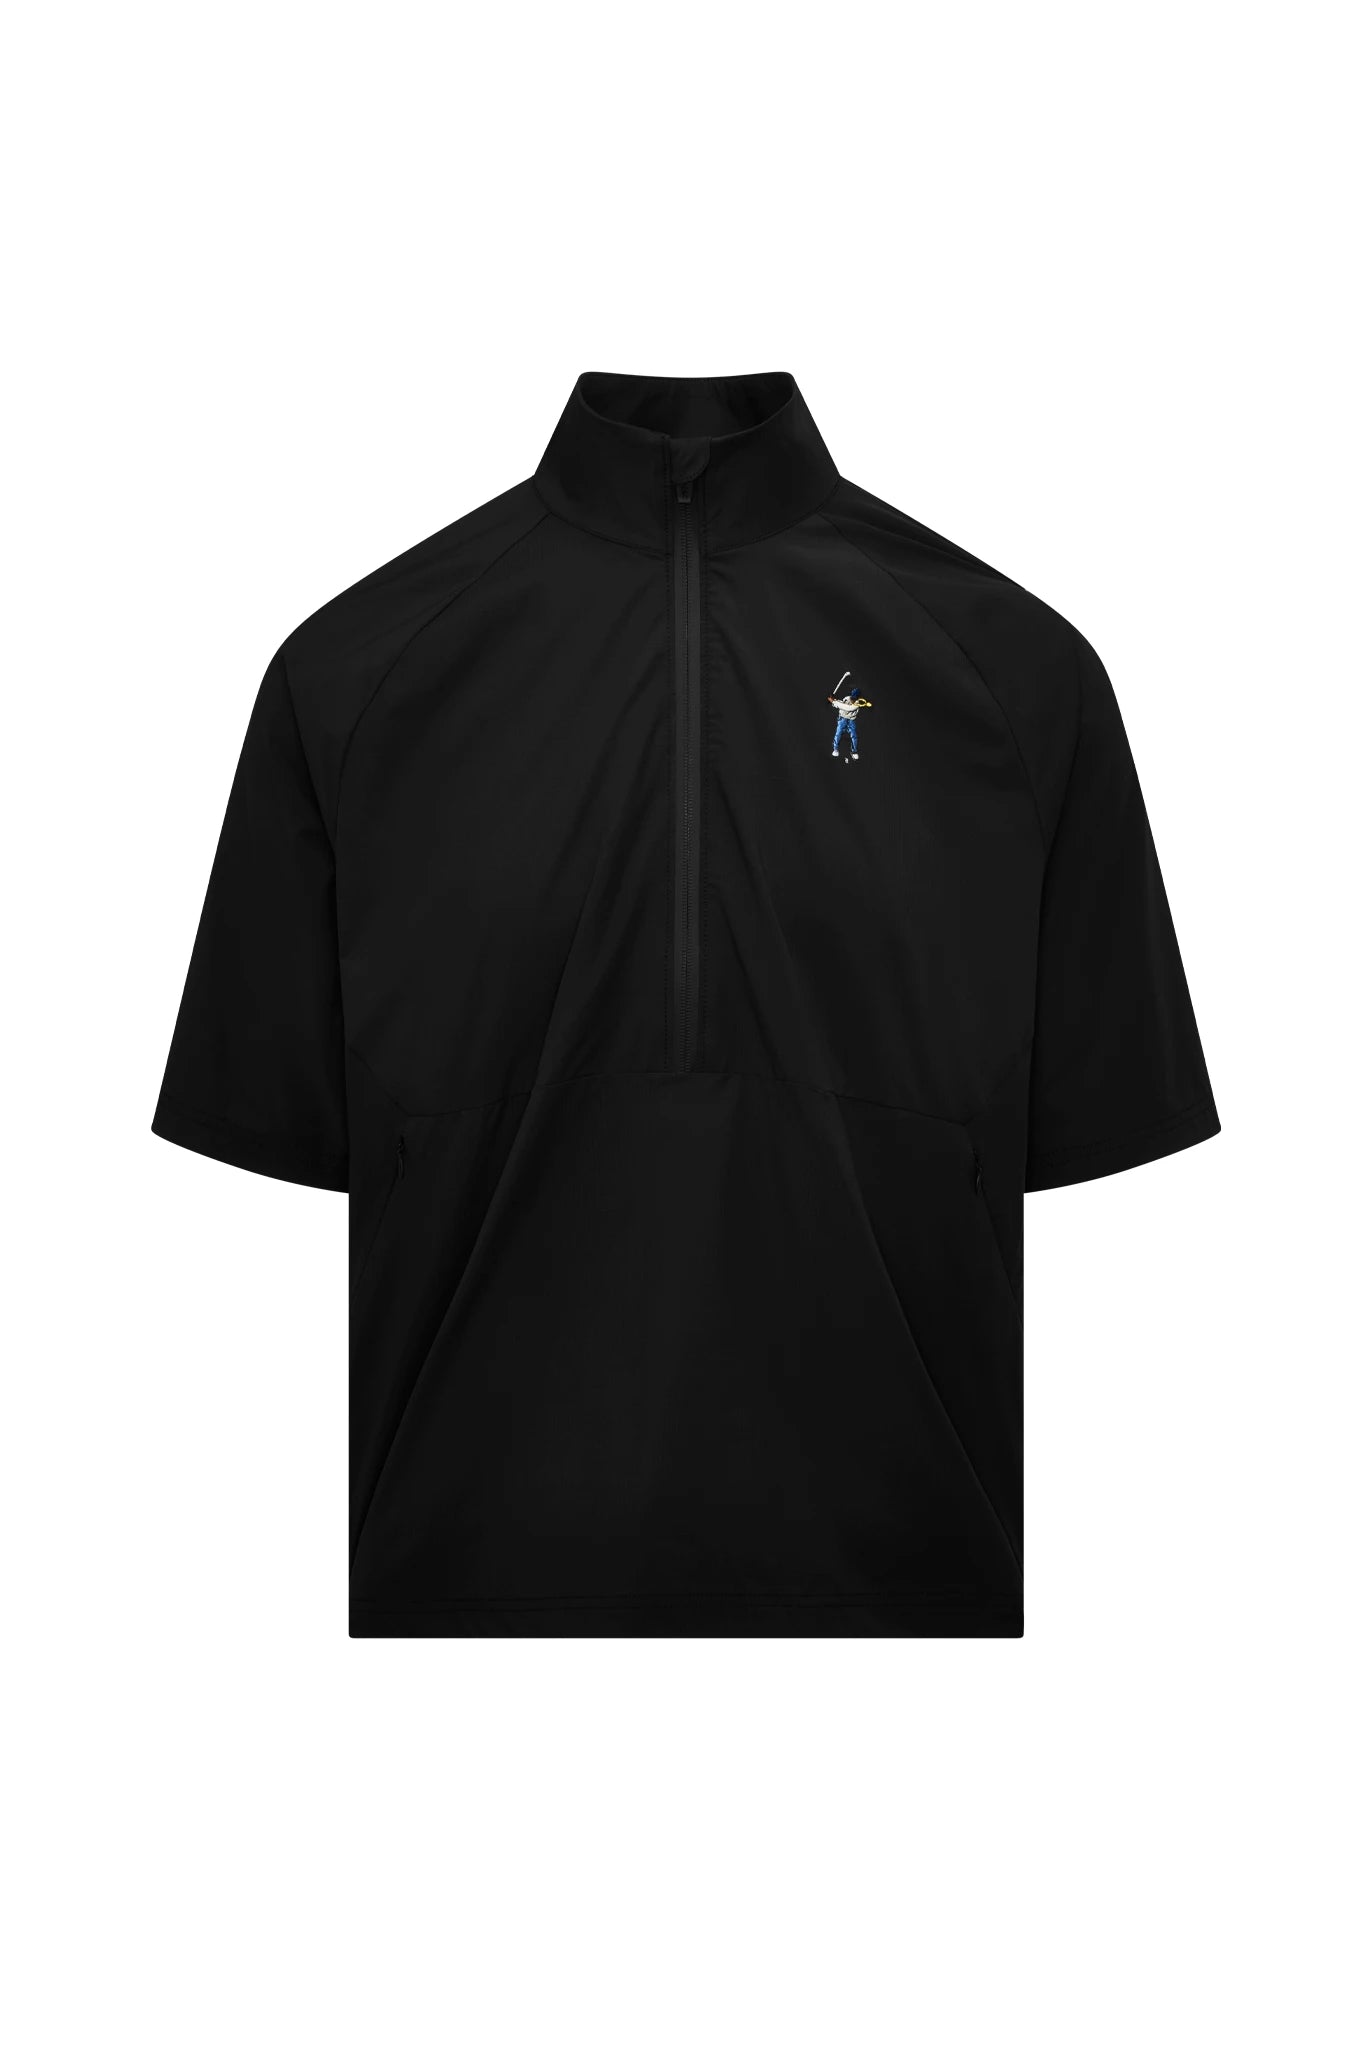 Black Eastside Golf Men's Short Sleeve Tech 1/2 Zip Mockneck Shirt